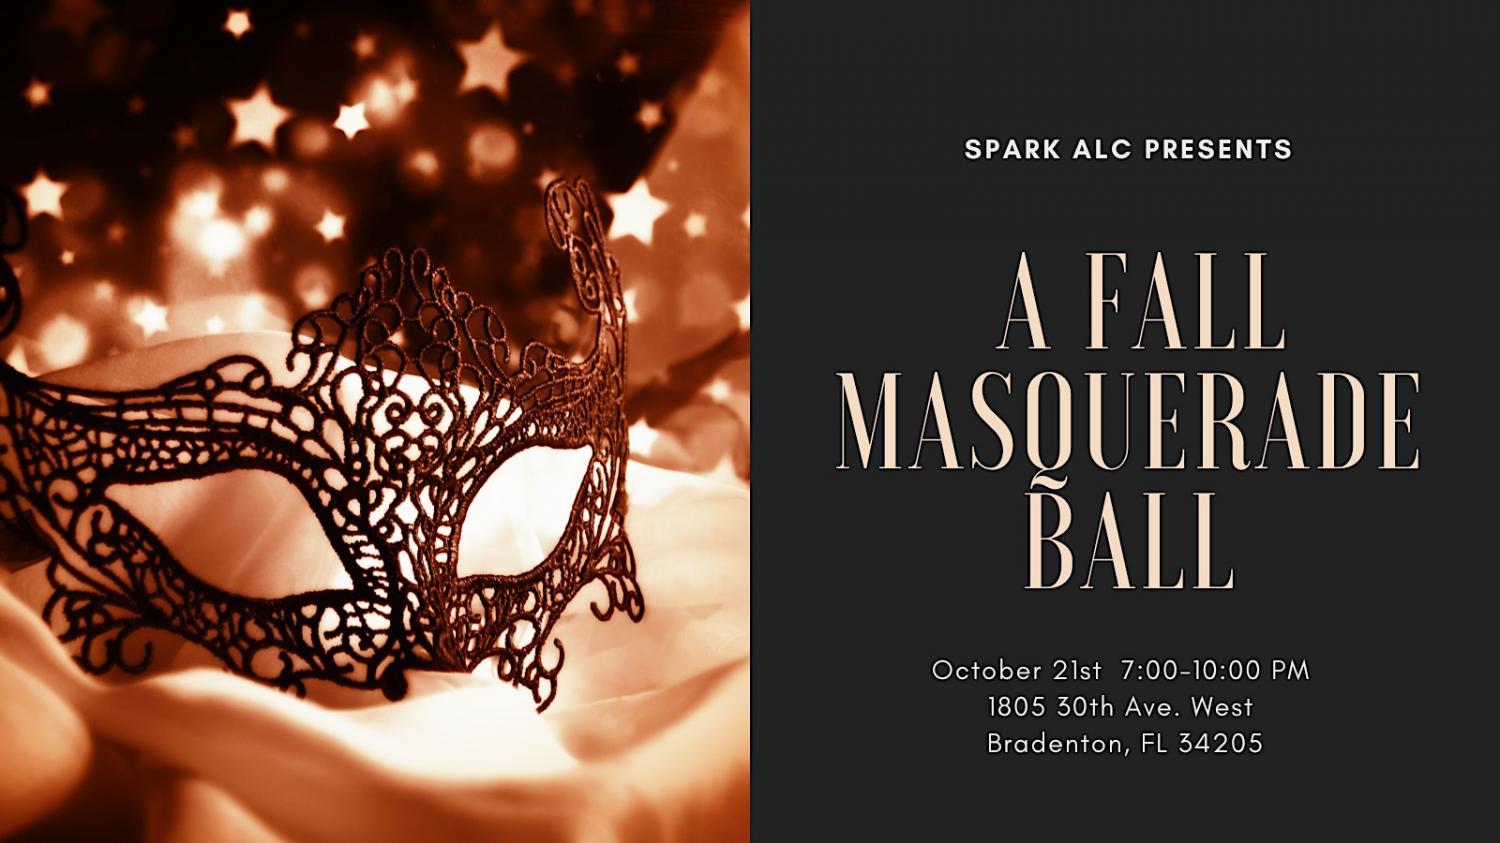 A Fall Masquerade Ball
Fri Oct 21, 7:00 PM - Fri Oct 21, 10:00 PM